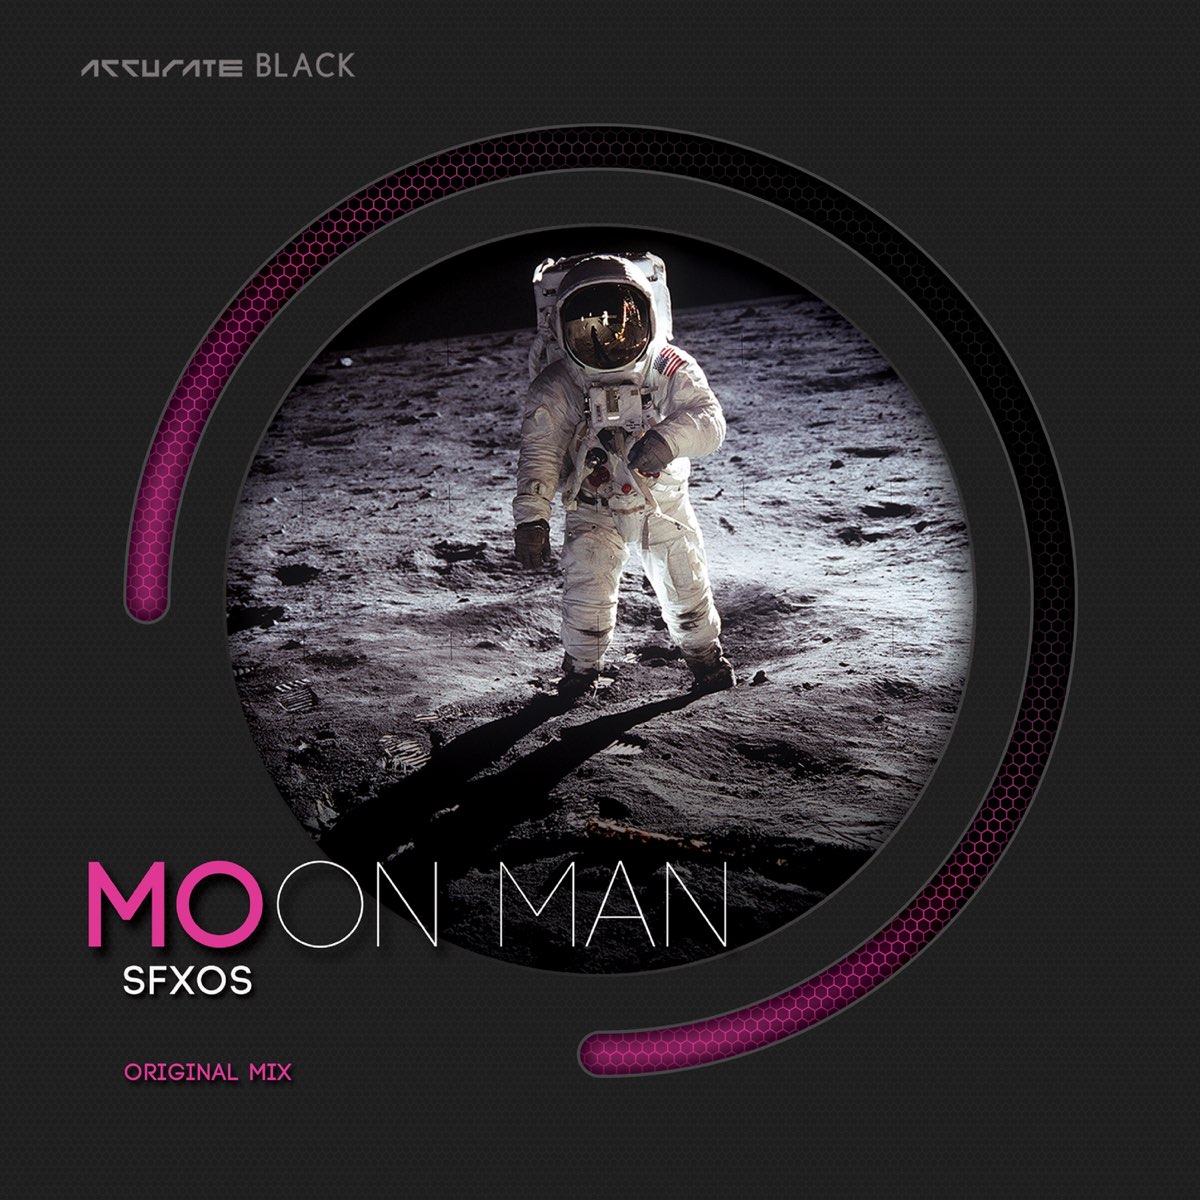 The Moon man. Moon man Productions. Man on the Moon (Radio Edit) кто. Moon man books China. Man on moon extended mix